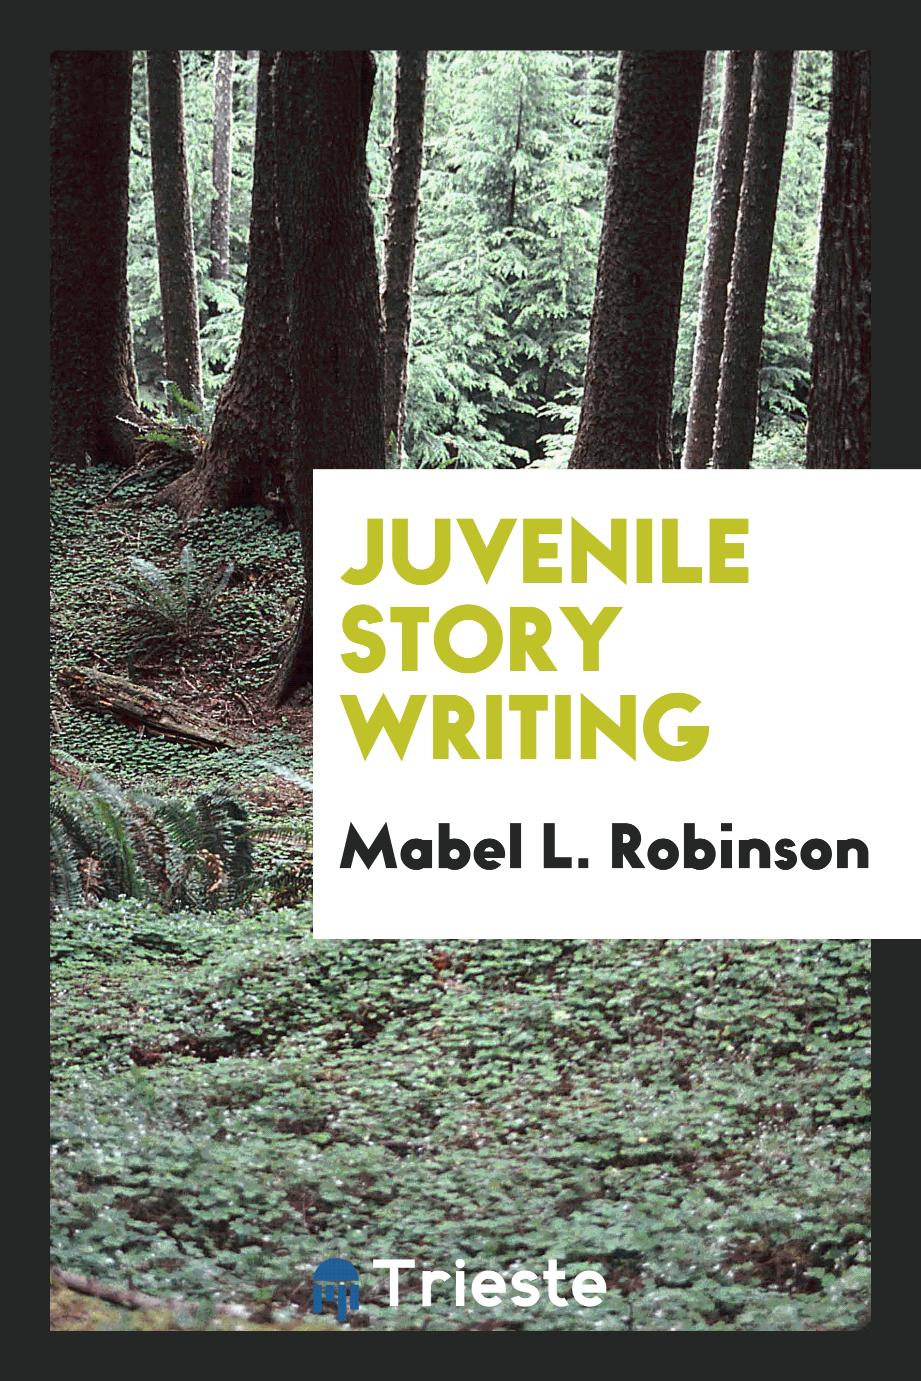 Juvenile story writing